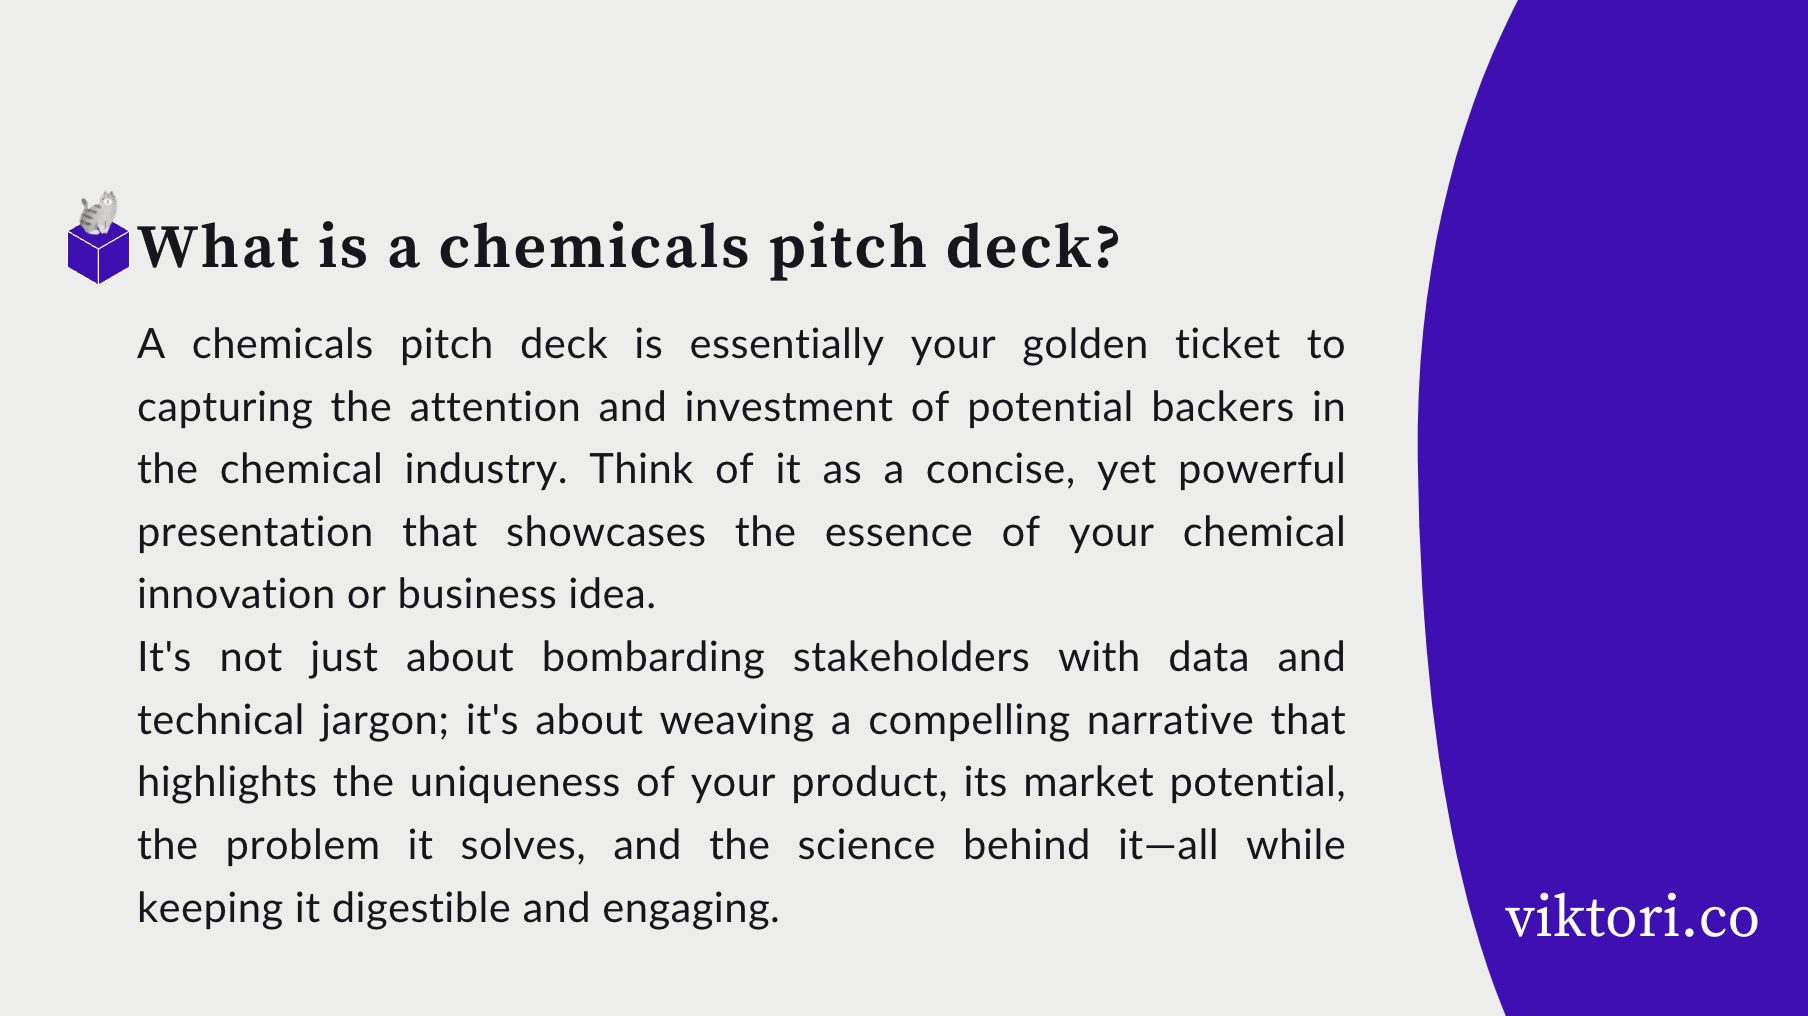 chemicals pitch deck definition